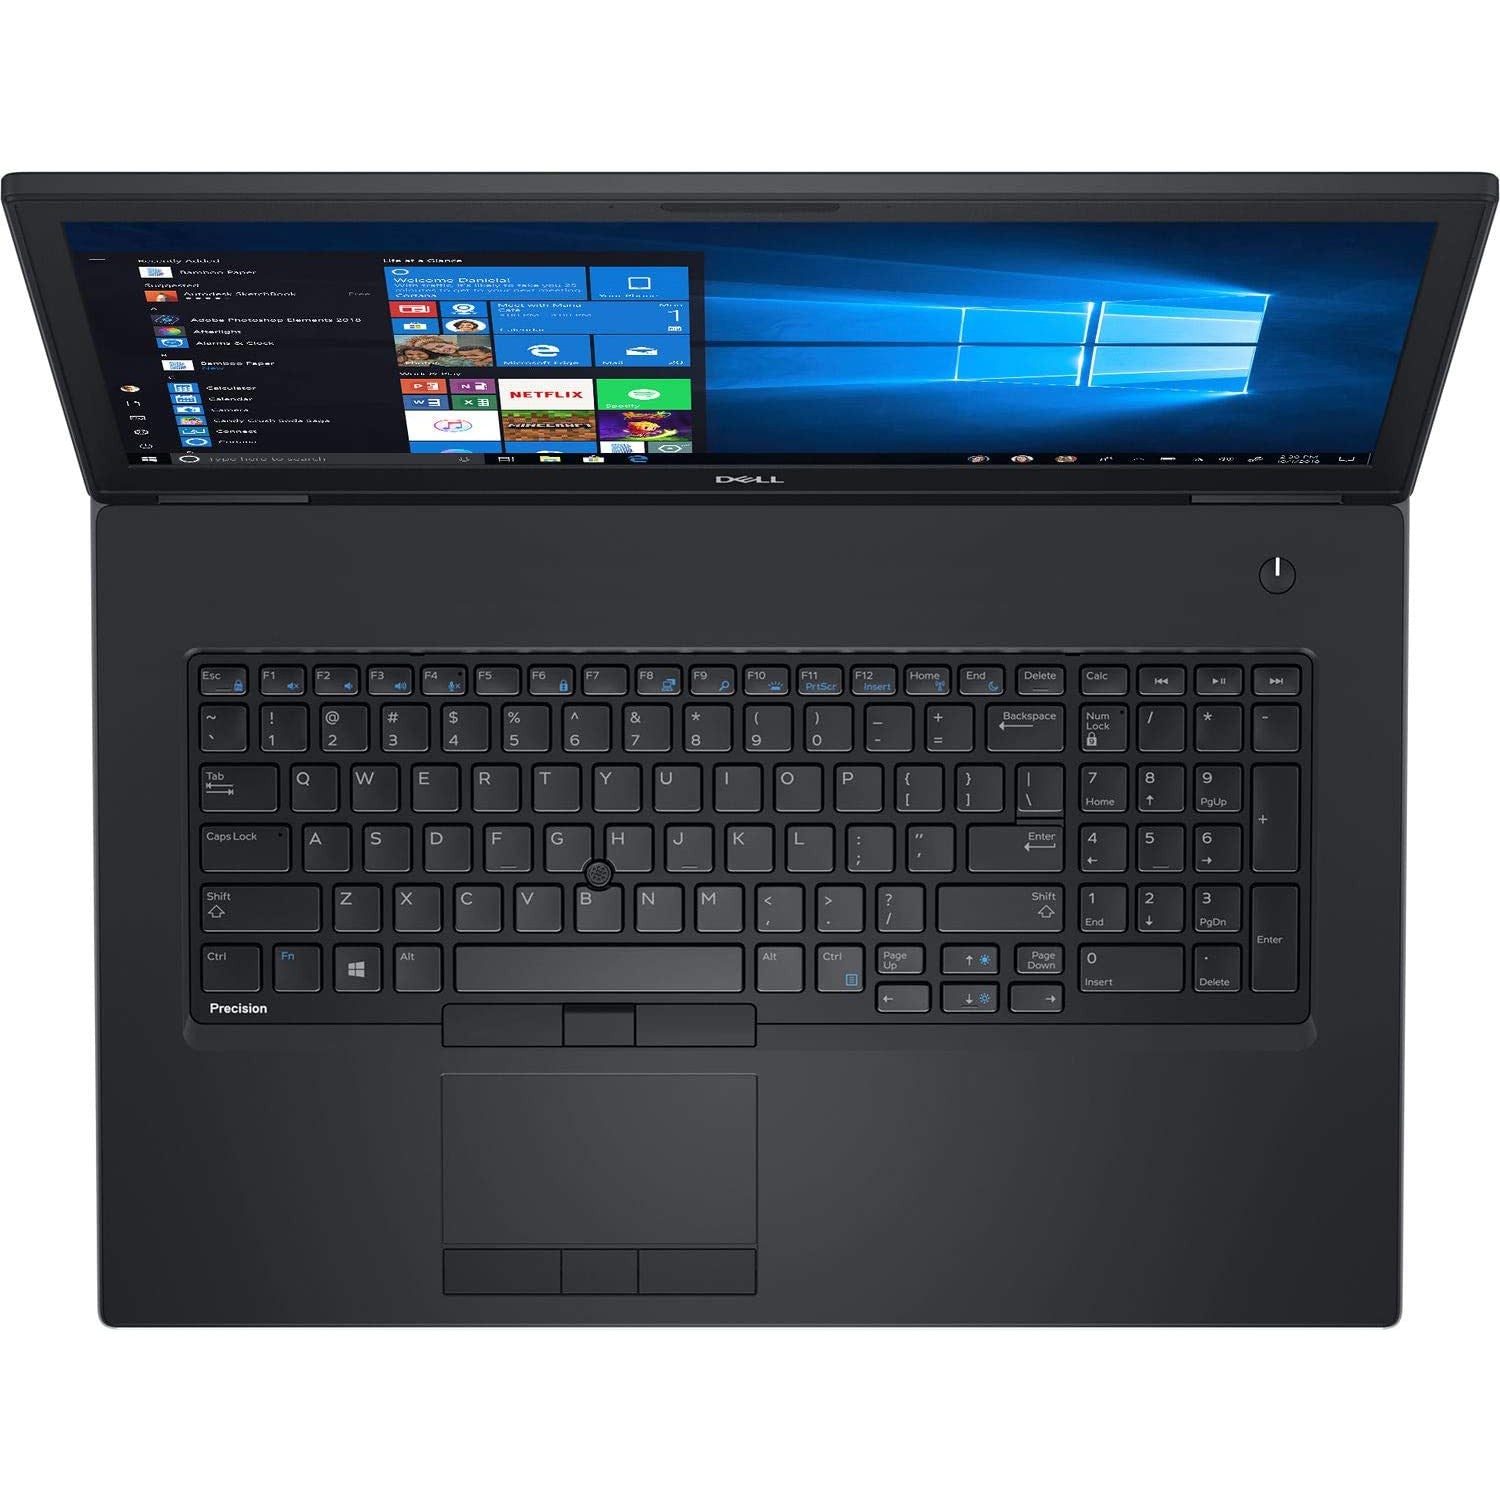 Dell Precision 7730 17" Laptop Intel Core i7-8850H 64GB RAM 2TB HDD - Black - Refurbished Excellent